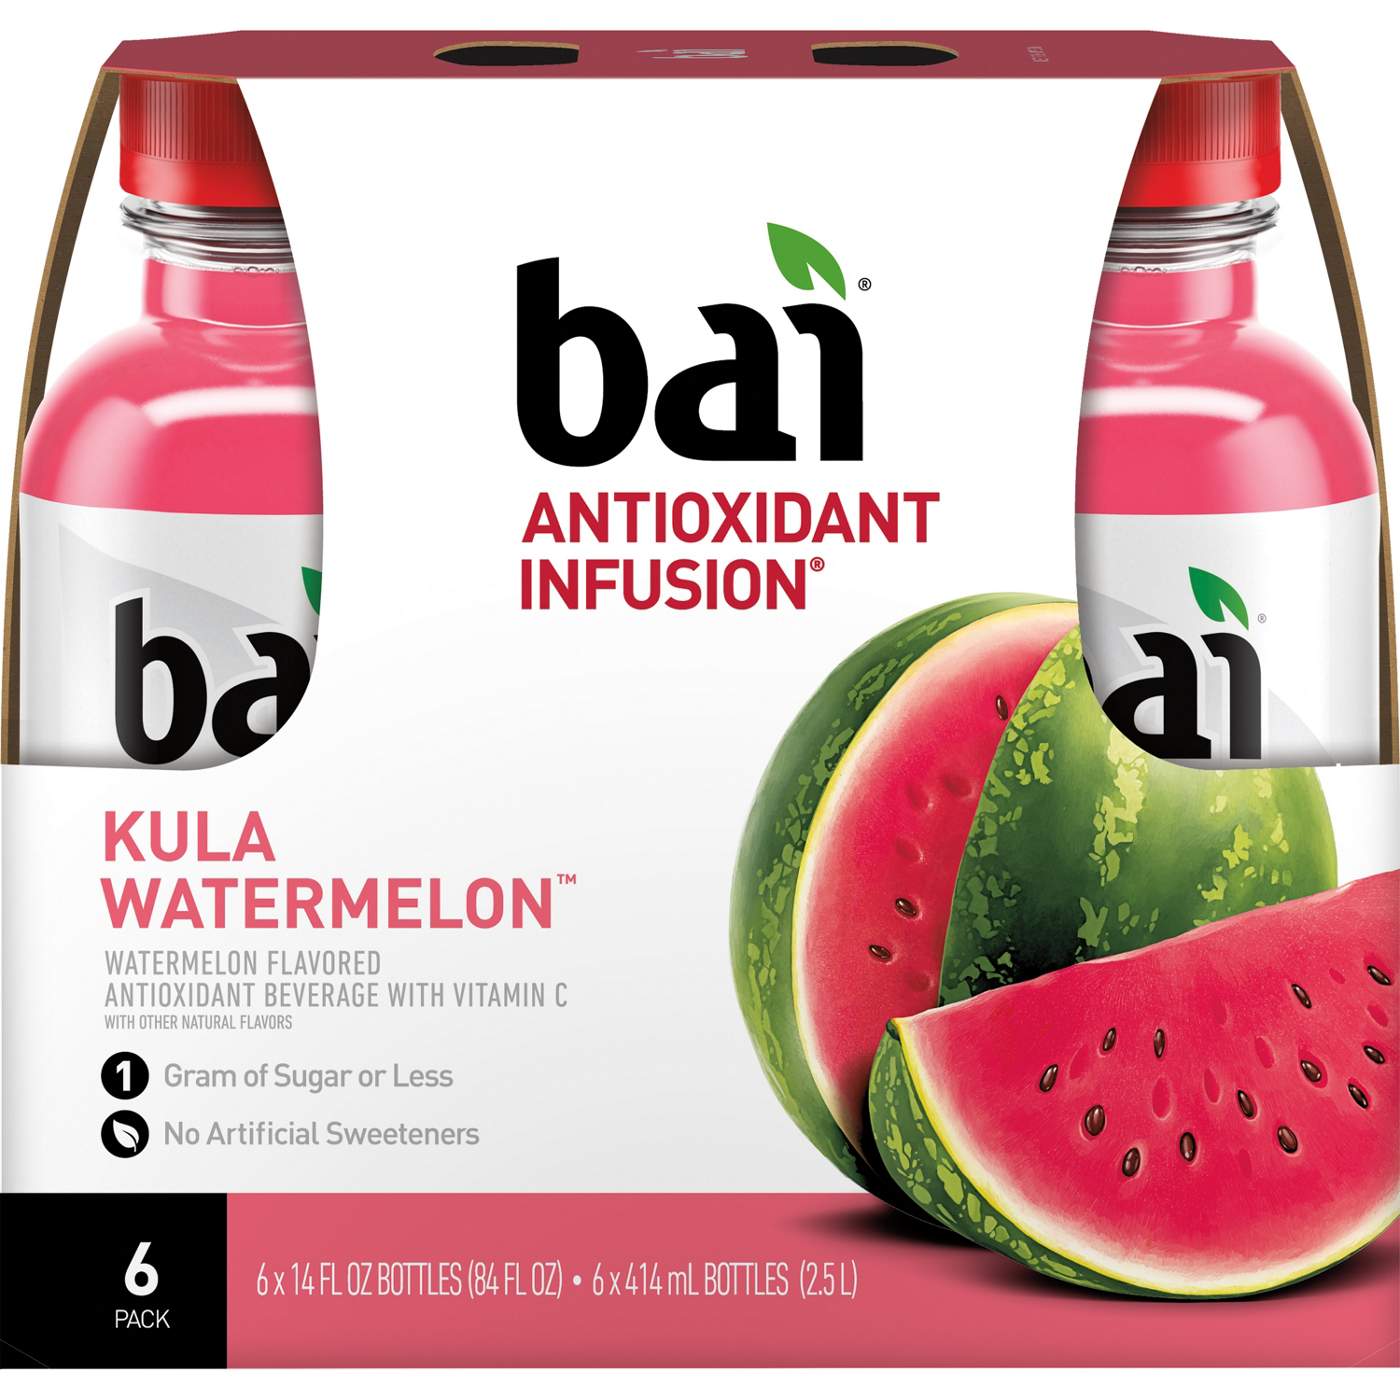 Bai Flavored Water, Kula Watermelon, Antioxidant Infused Drinks, Pack of 12